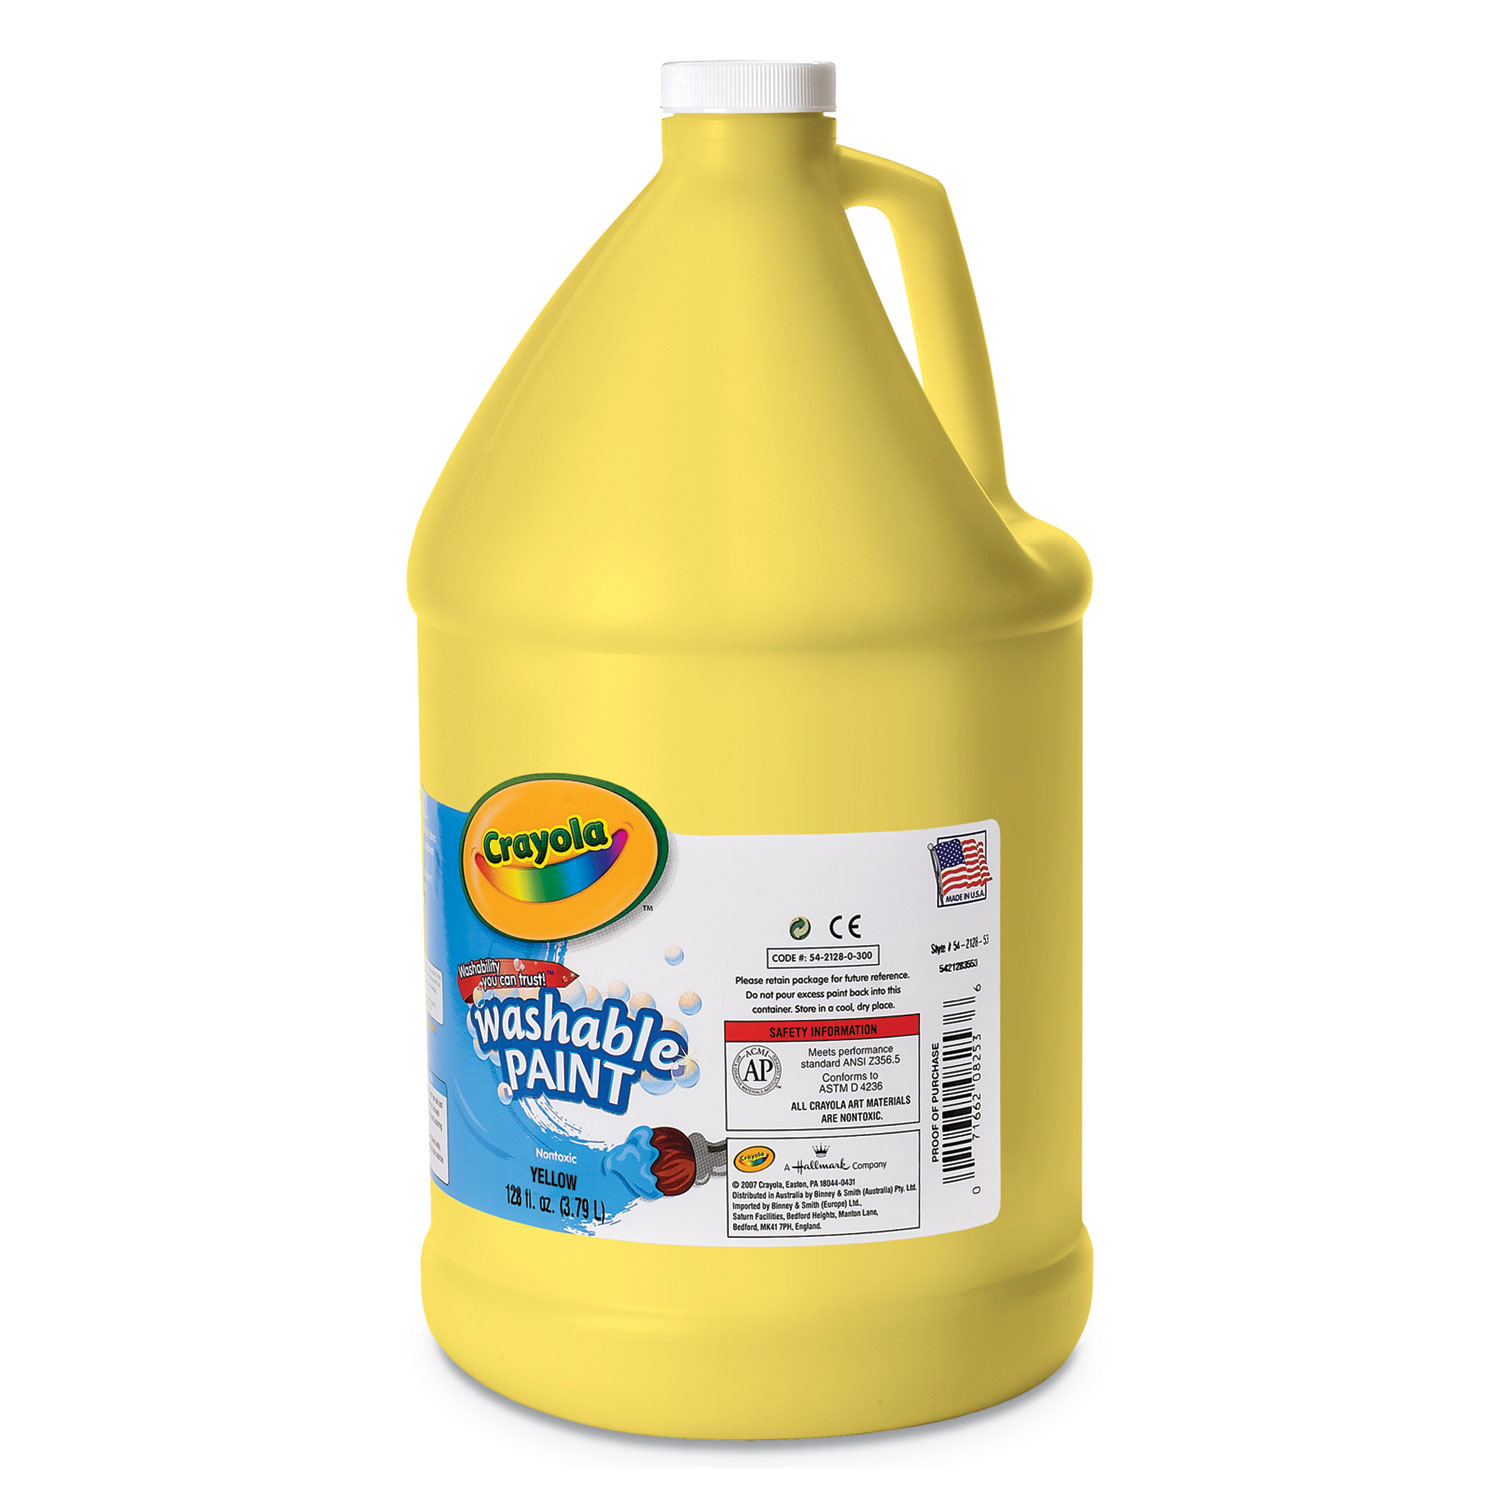  Crayola 542128034 Washable Paint, Yellow, 1 gal (CYO542128034) 